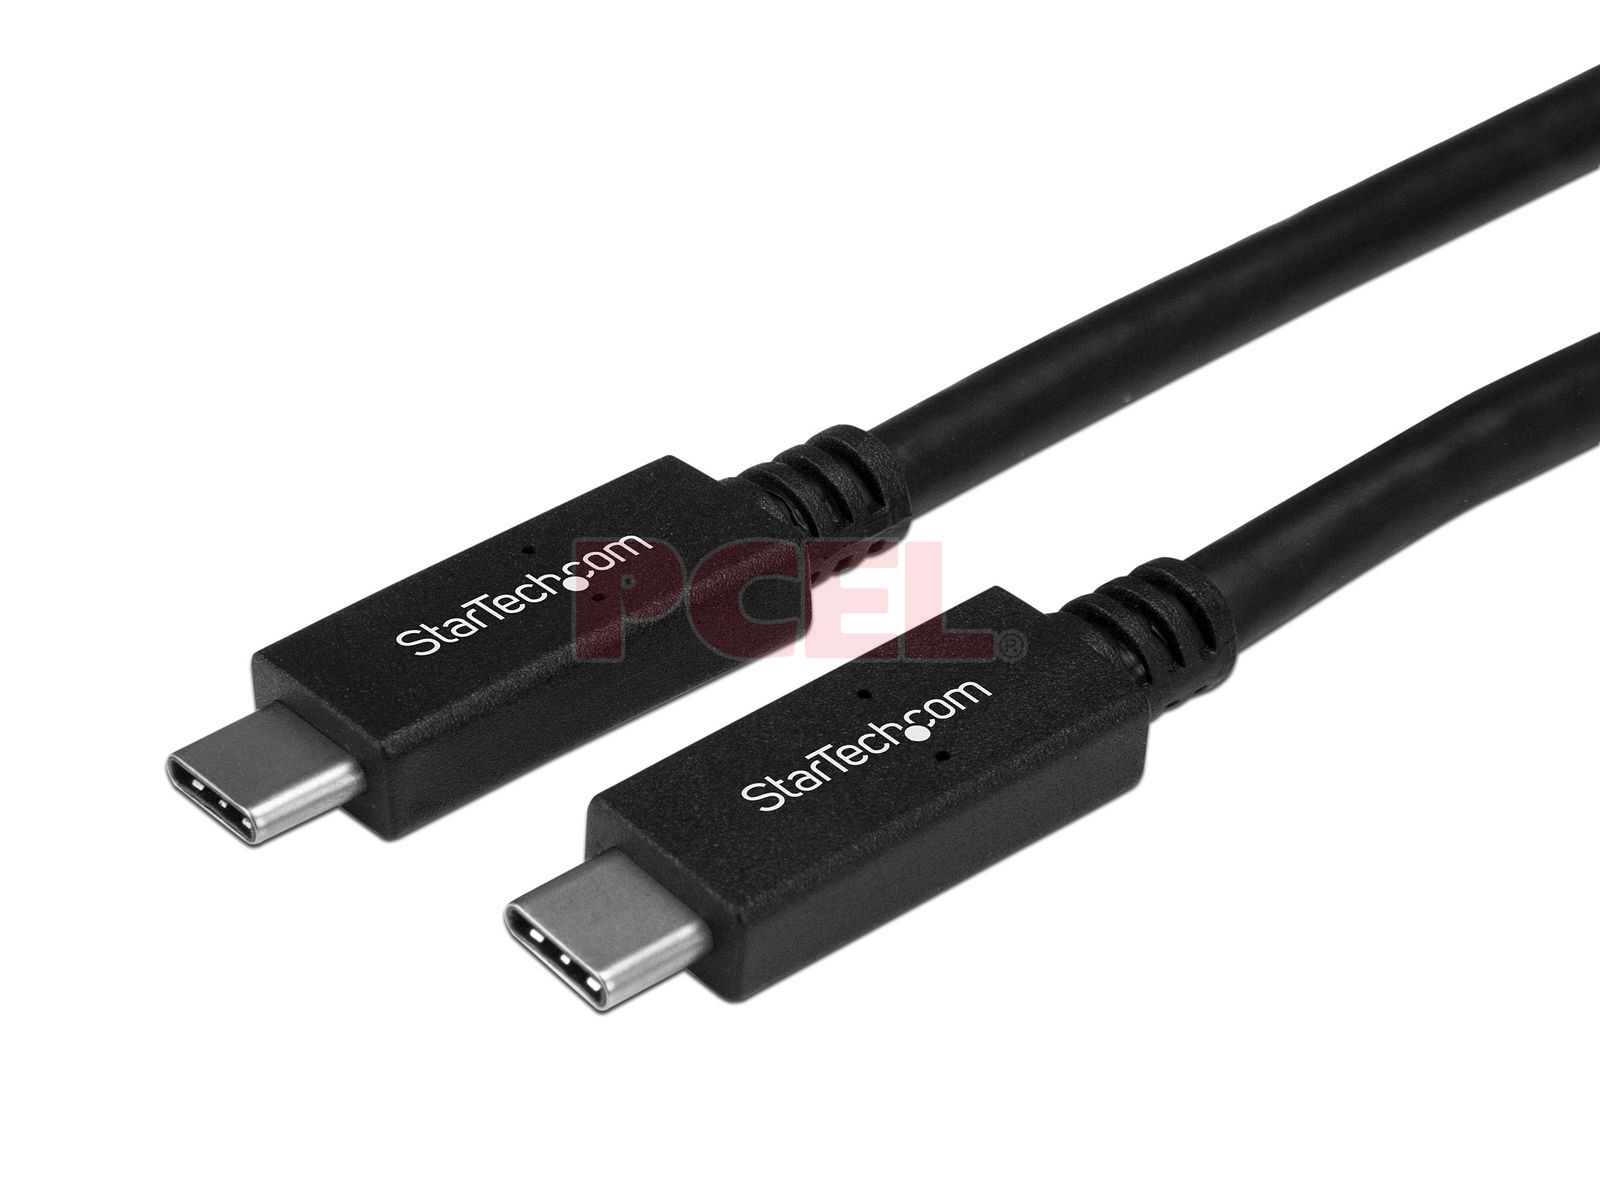 https://images.pcel.com/1600/Accesorios-Cables-USB-StarTech-USB31CC1M-122926-Ast7vqKV4dHUV9ti.jpg